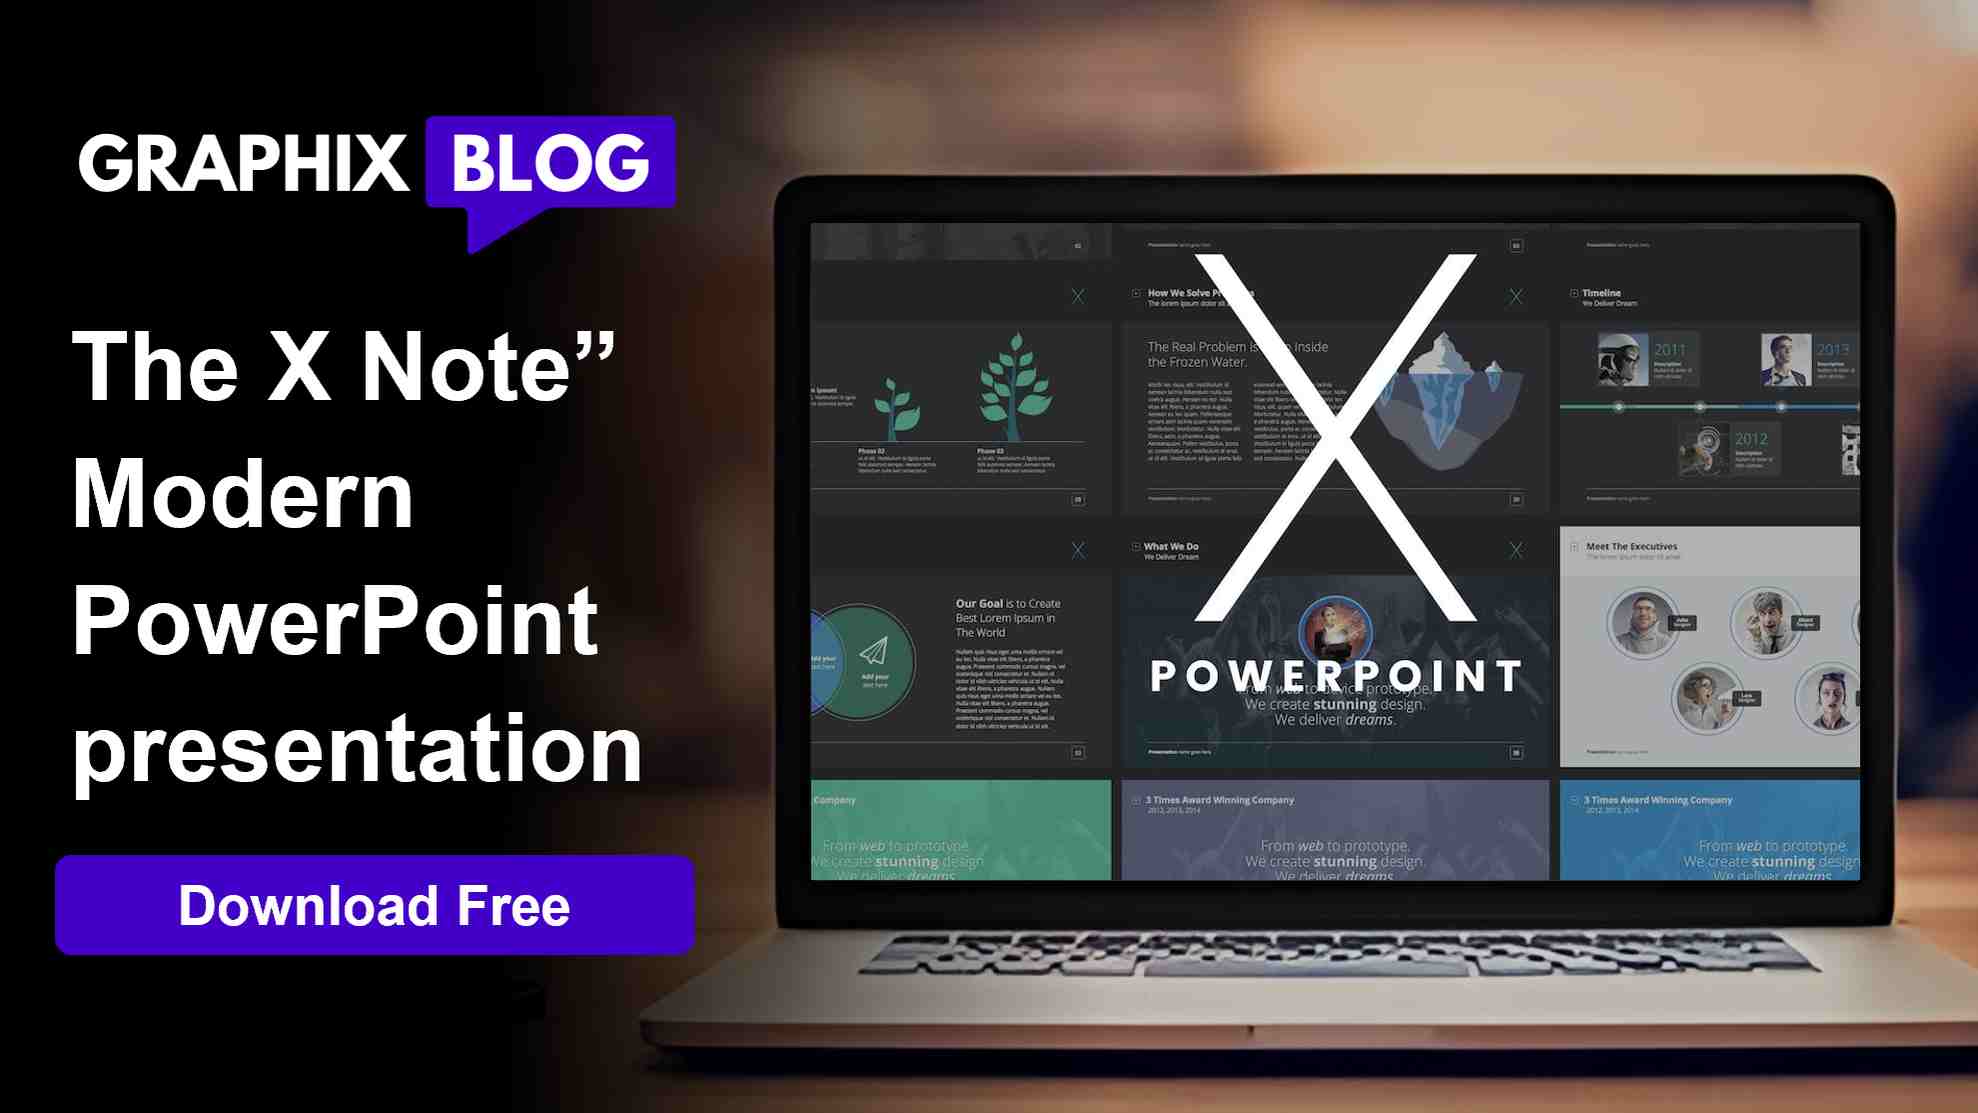 The X Note” Modern PowerPoint presentation